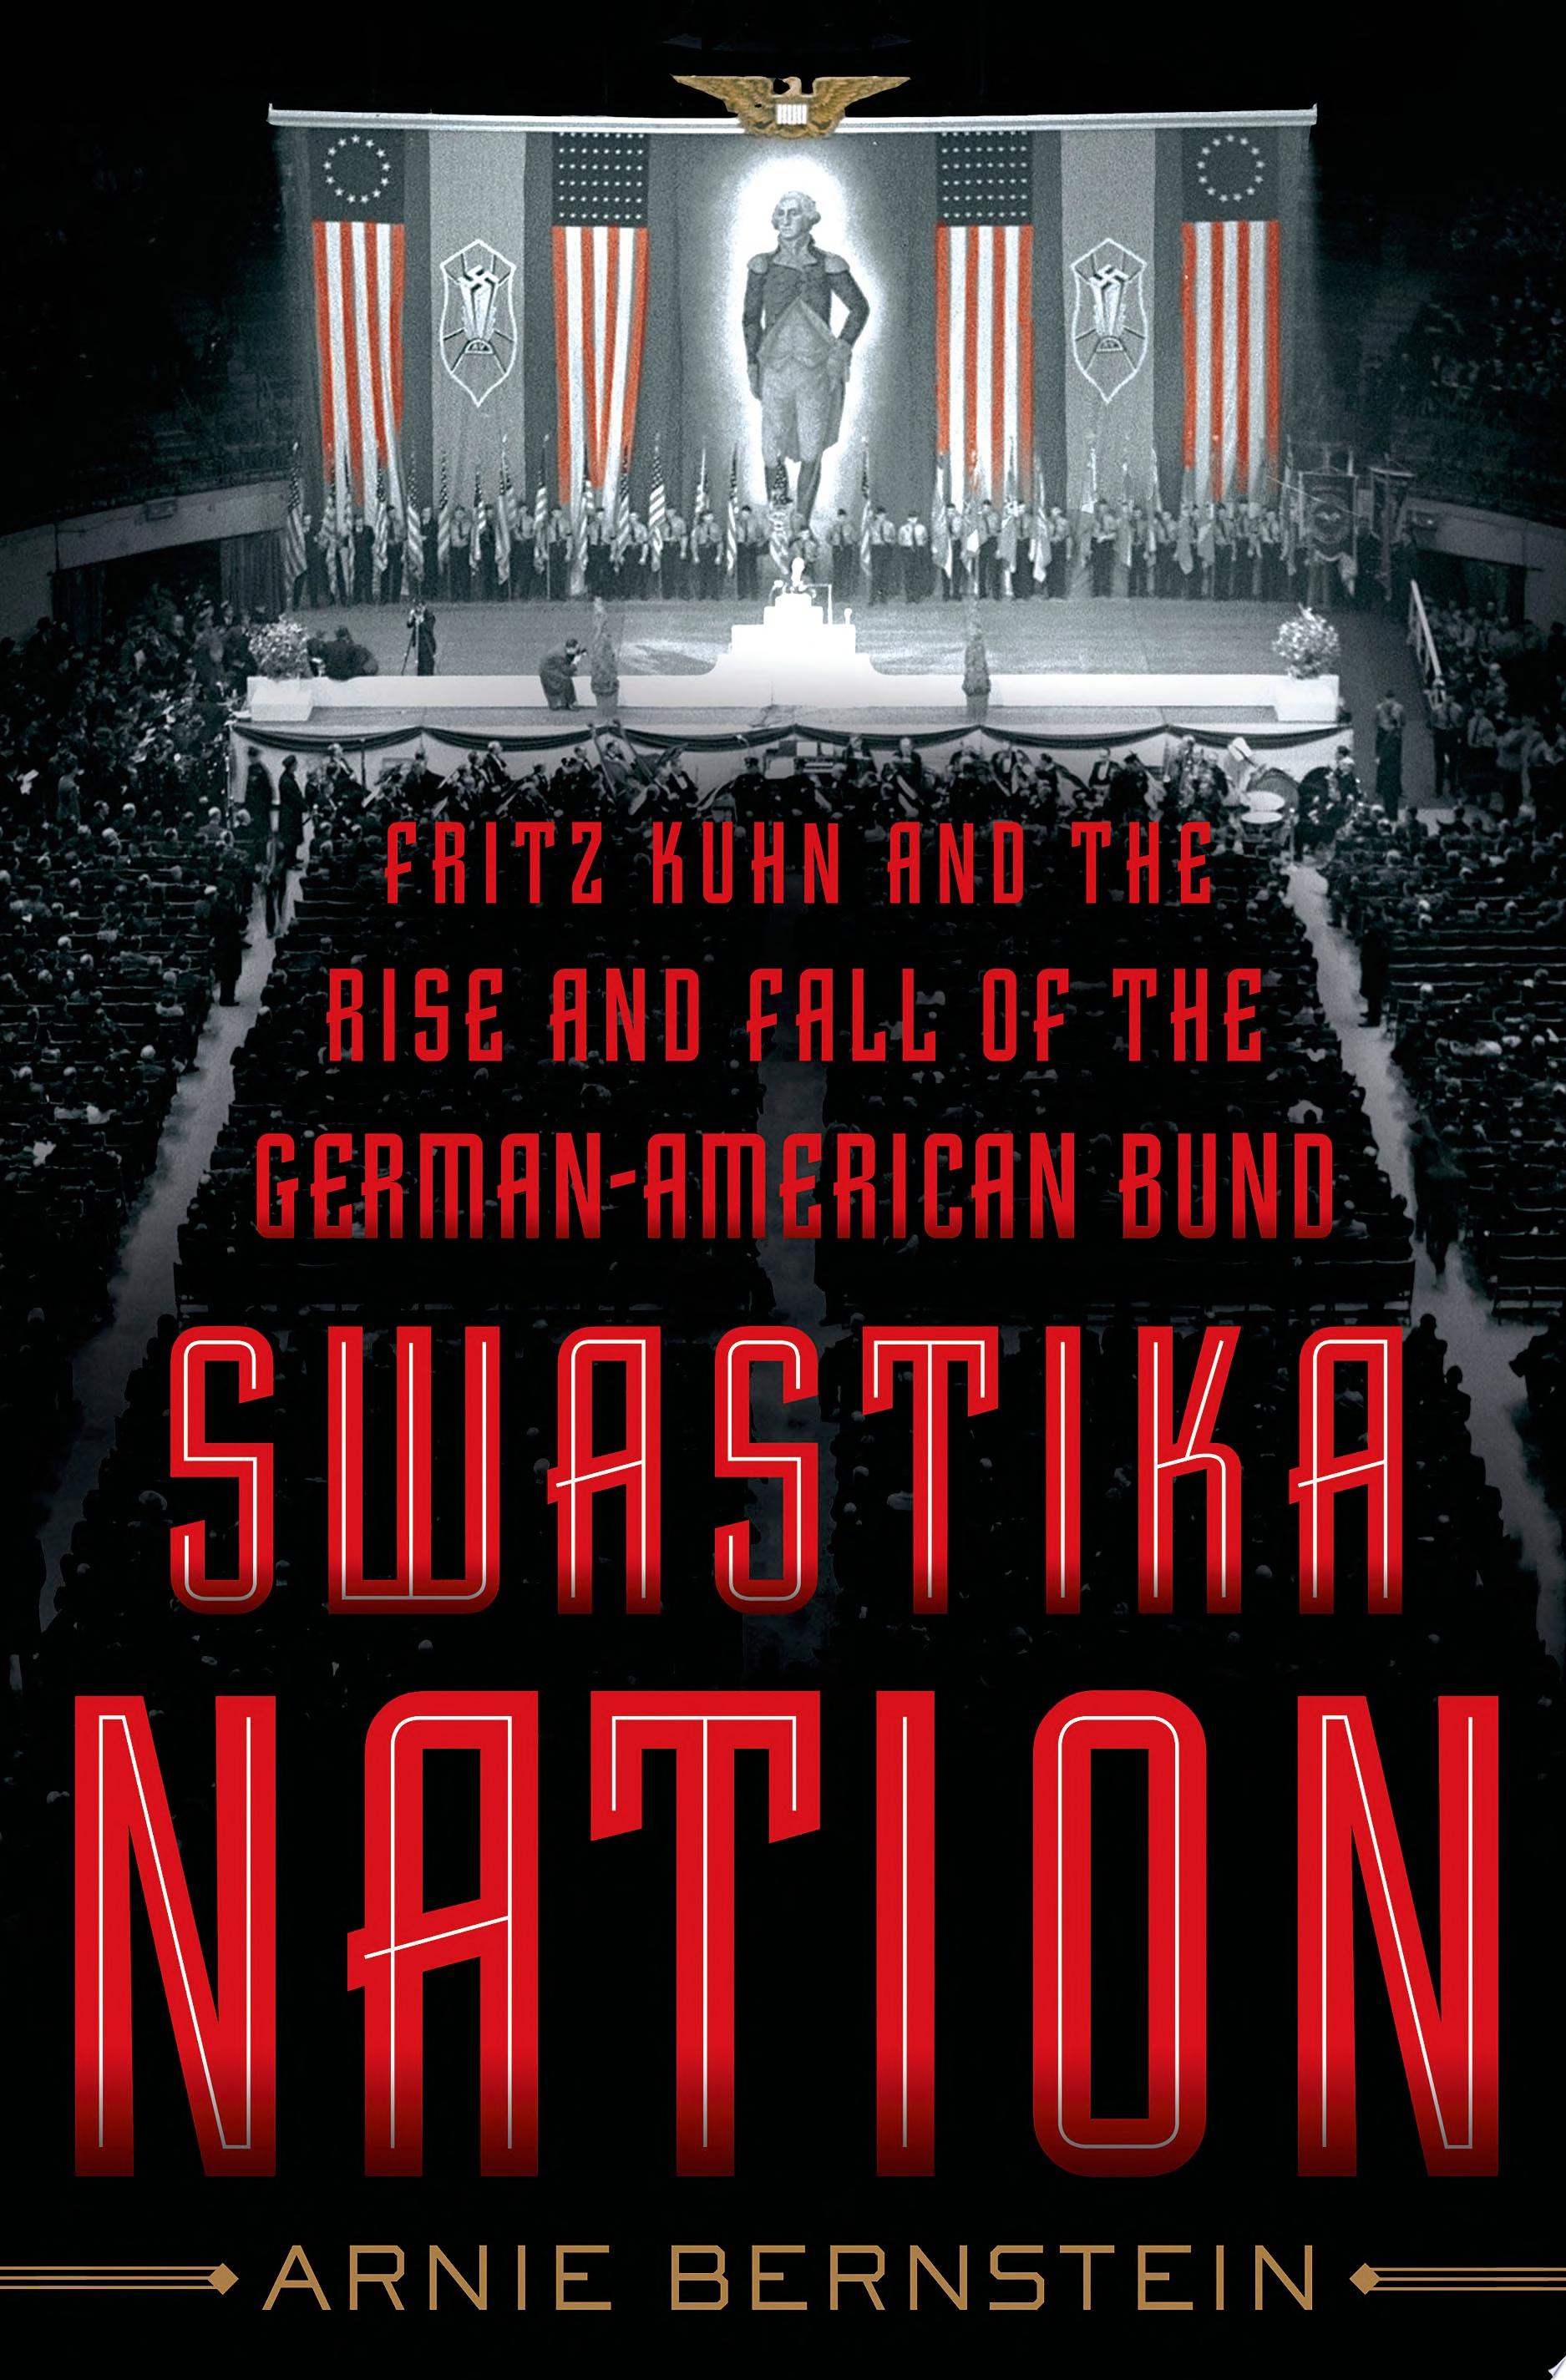 Image for "Swastika Nation"